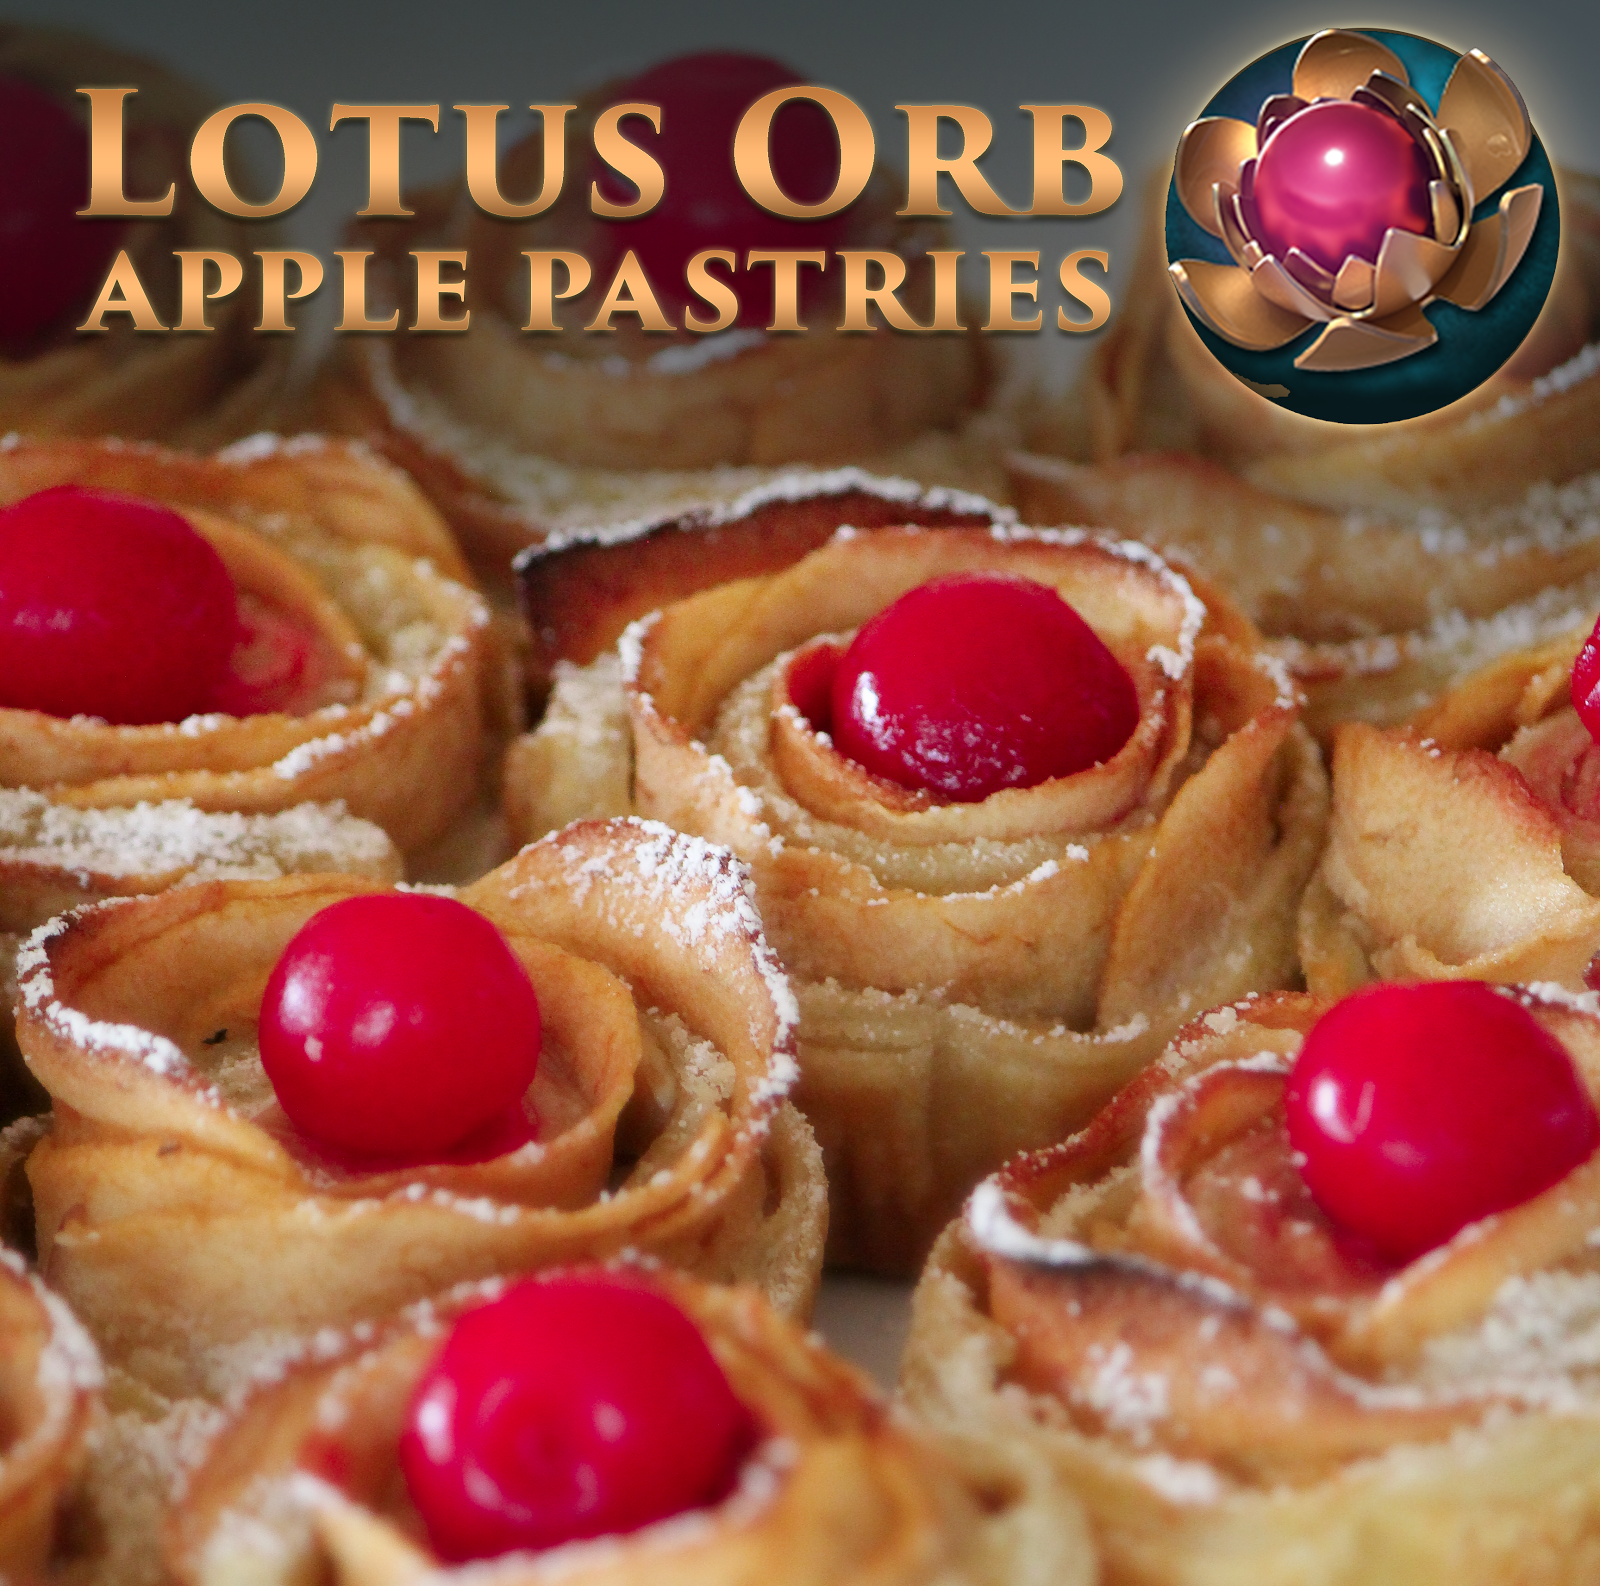 Dota 2 Lotus Orb Apple Pastries with cherries